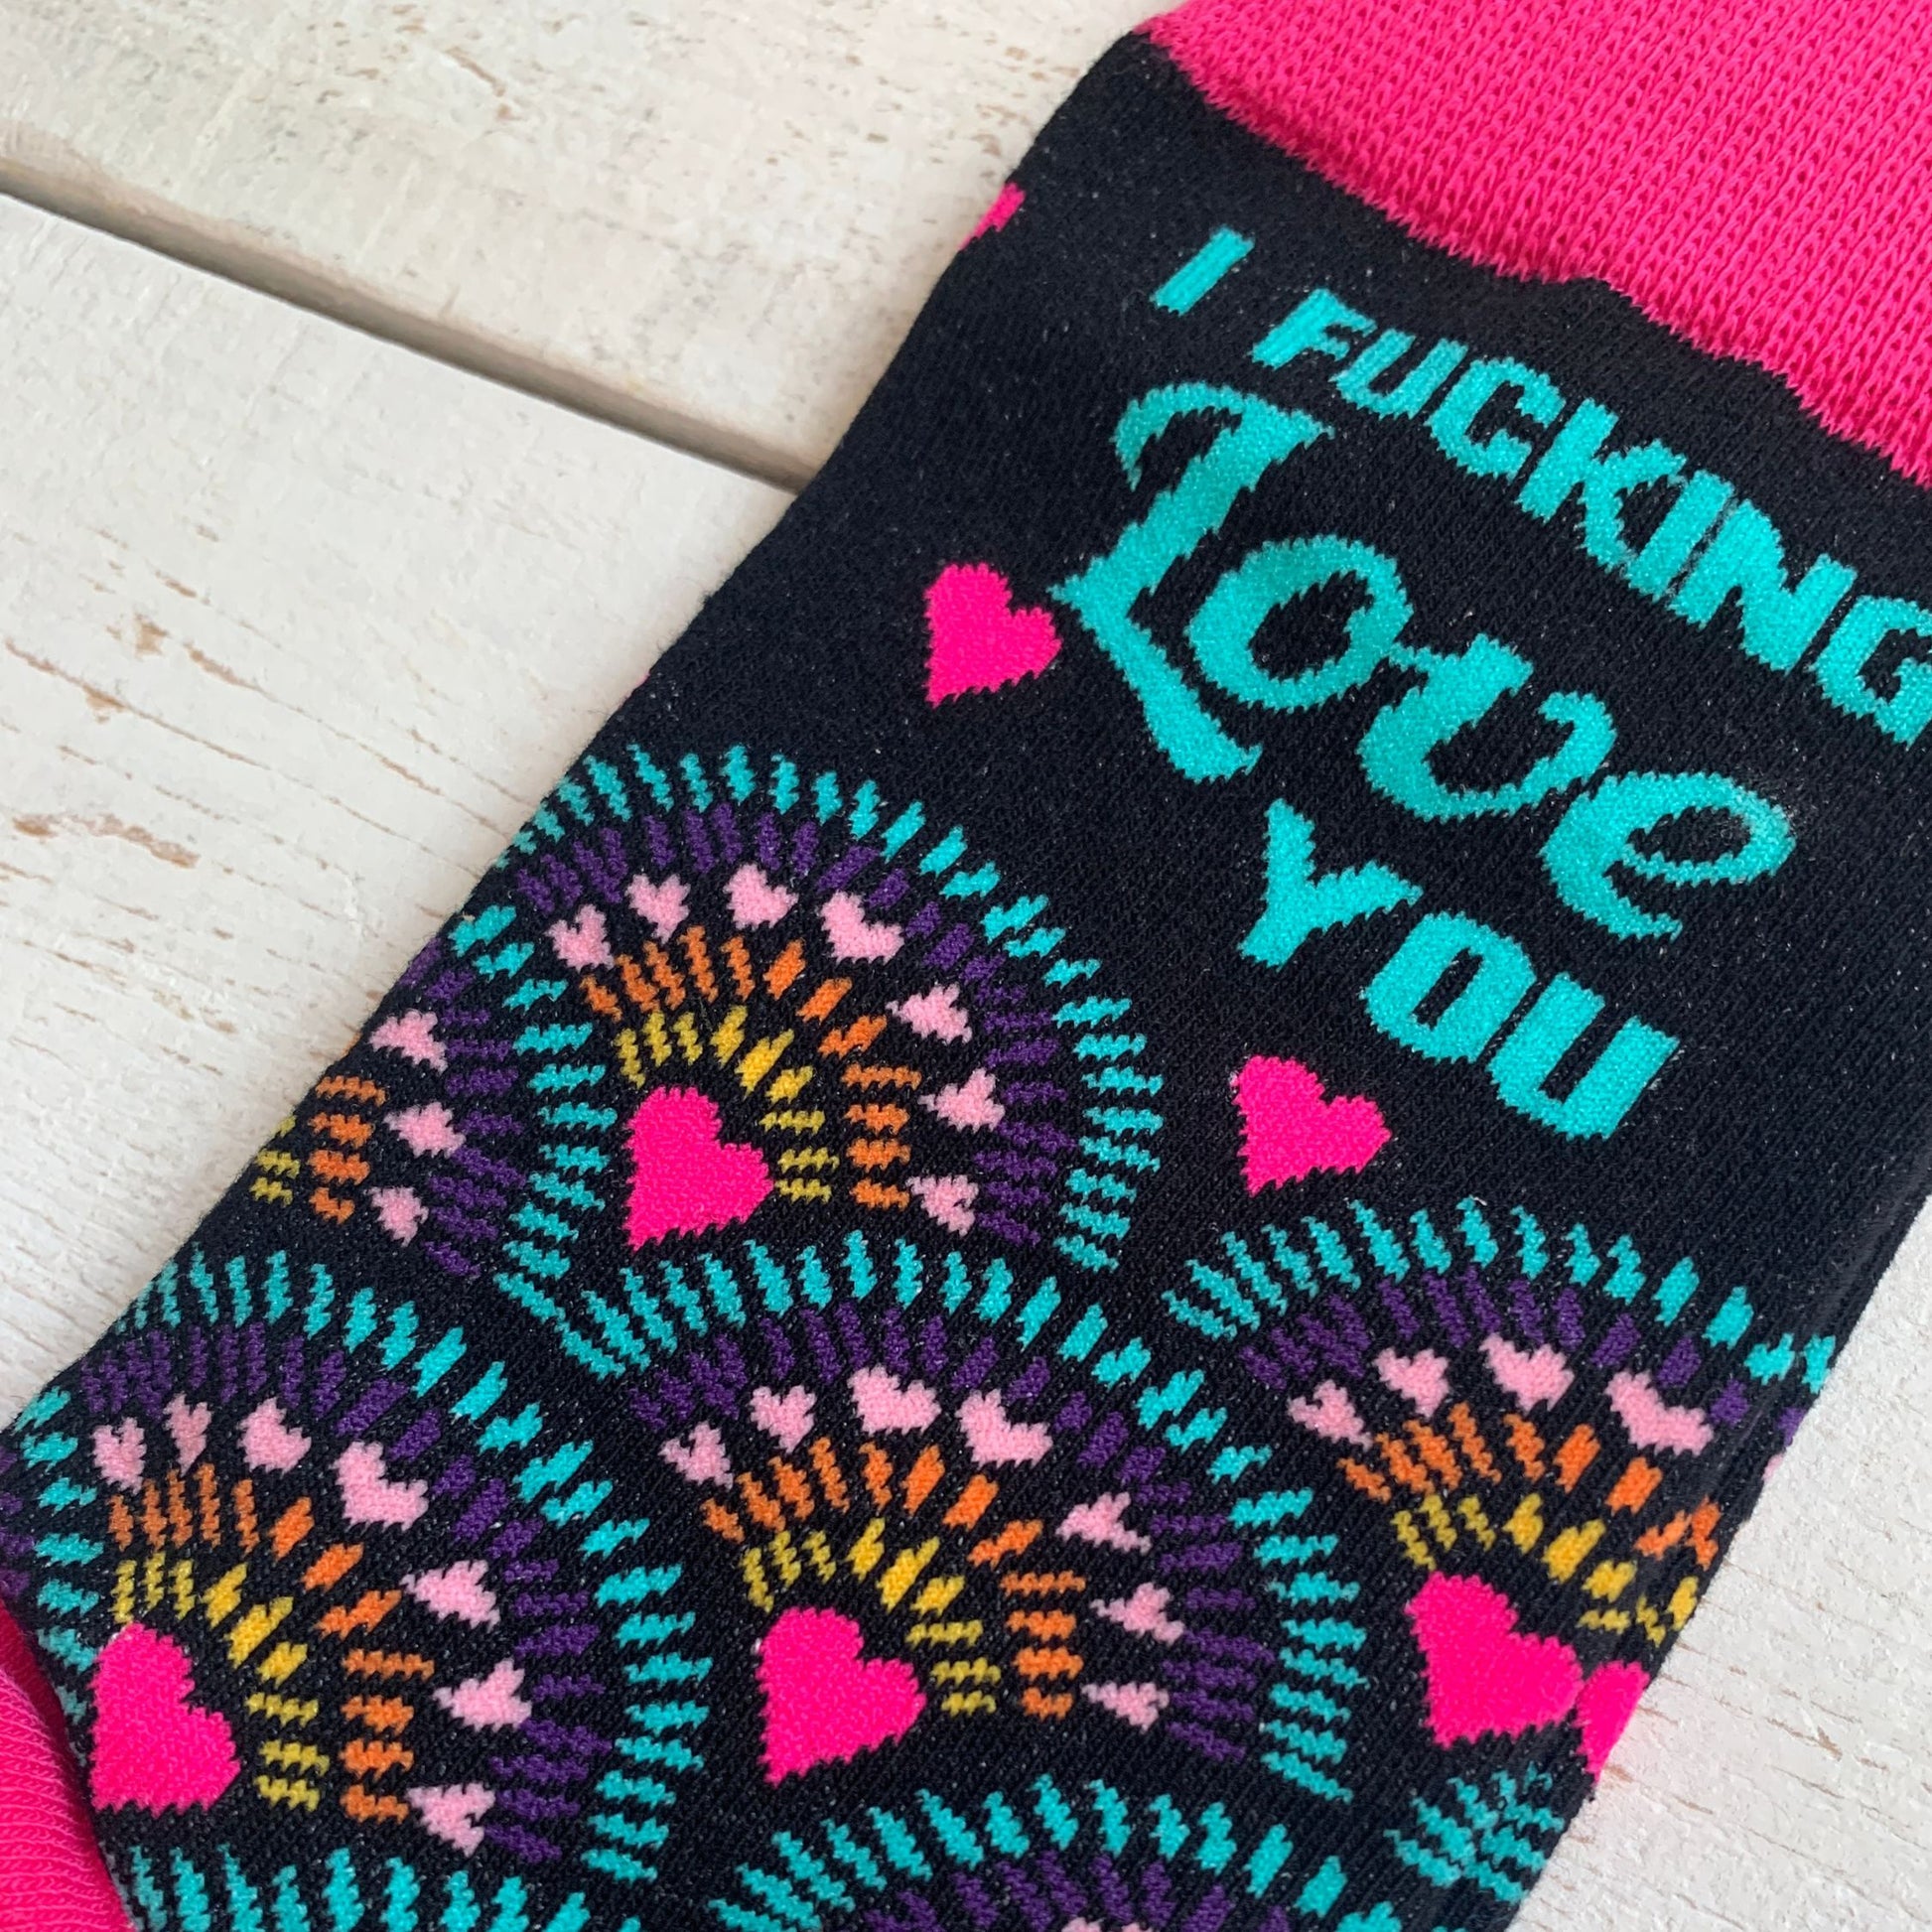 I Fucking Love You Women's Crew Socks | Hearts Design Ladies Novelty Socks